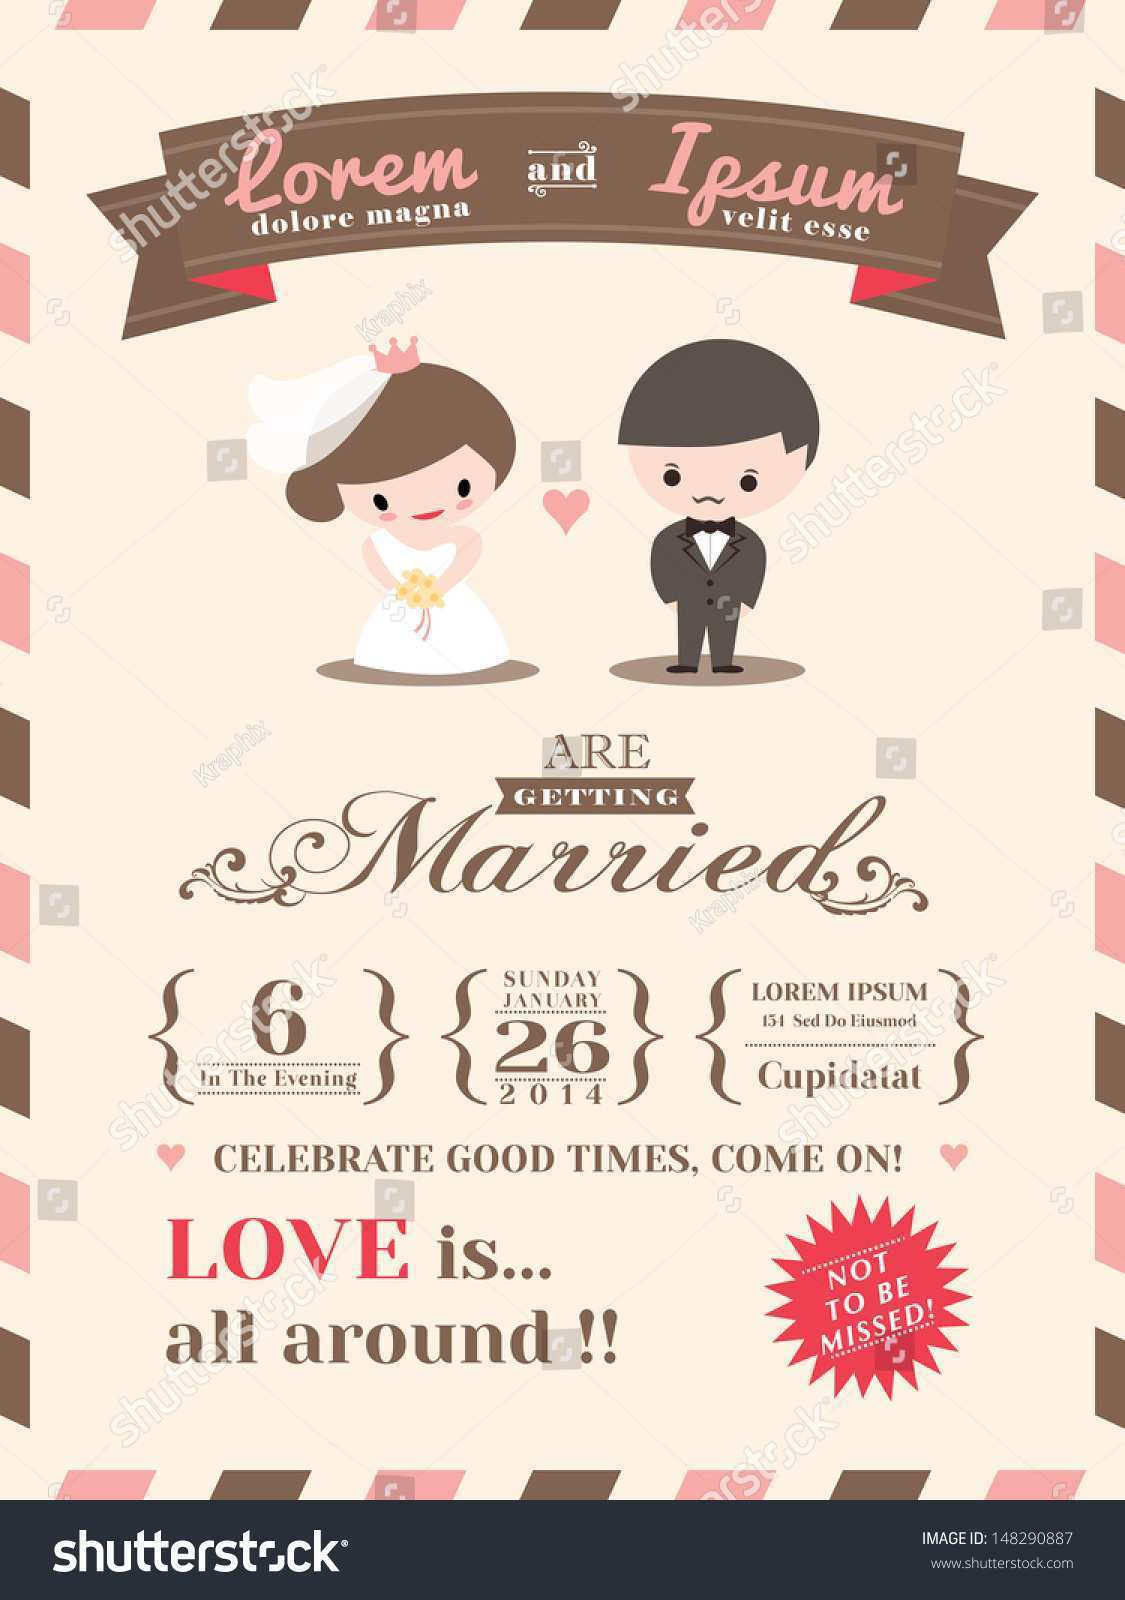 48 Standard Wedding Card Templates For Whatsapp in Photoshop for Wedding Card Templates For Whatsapp